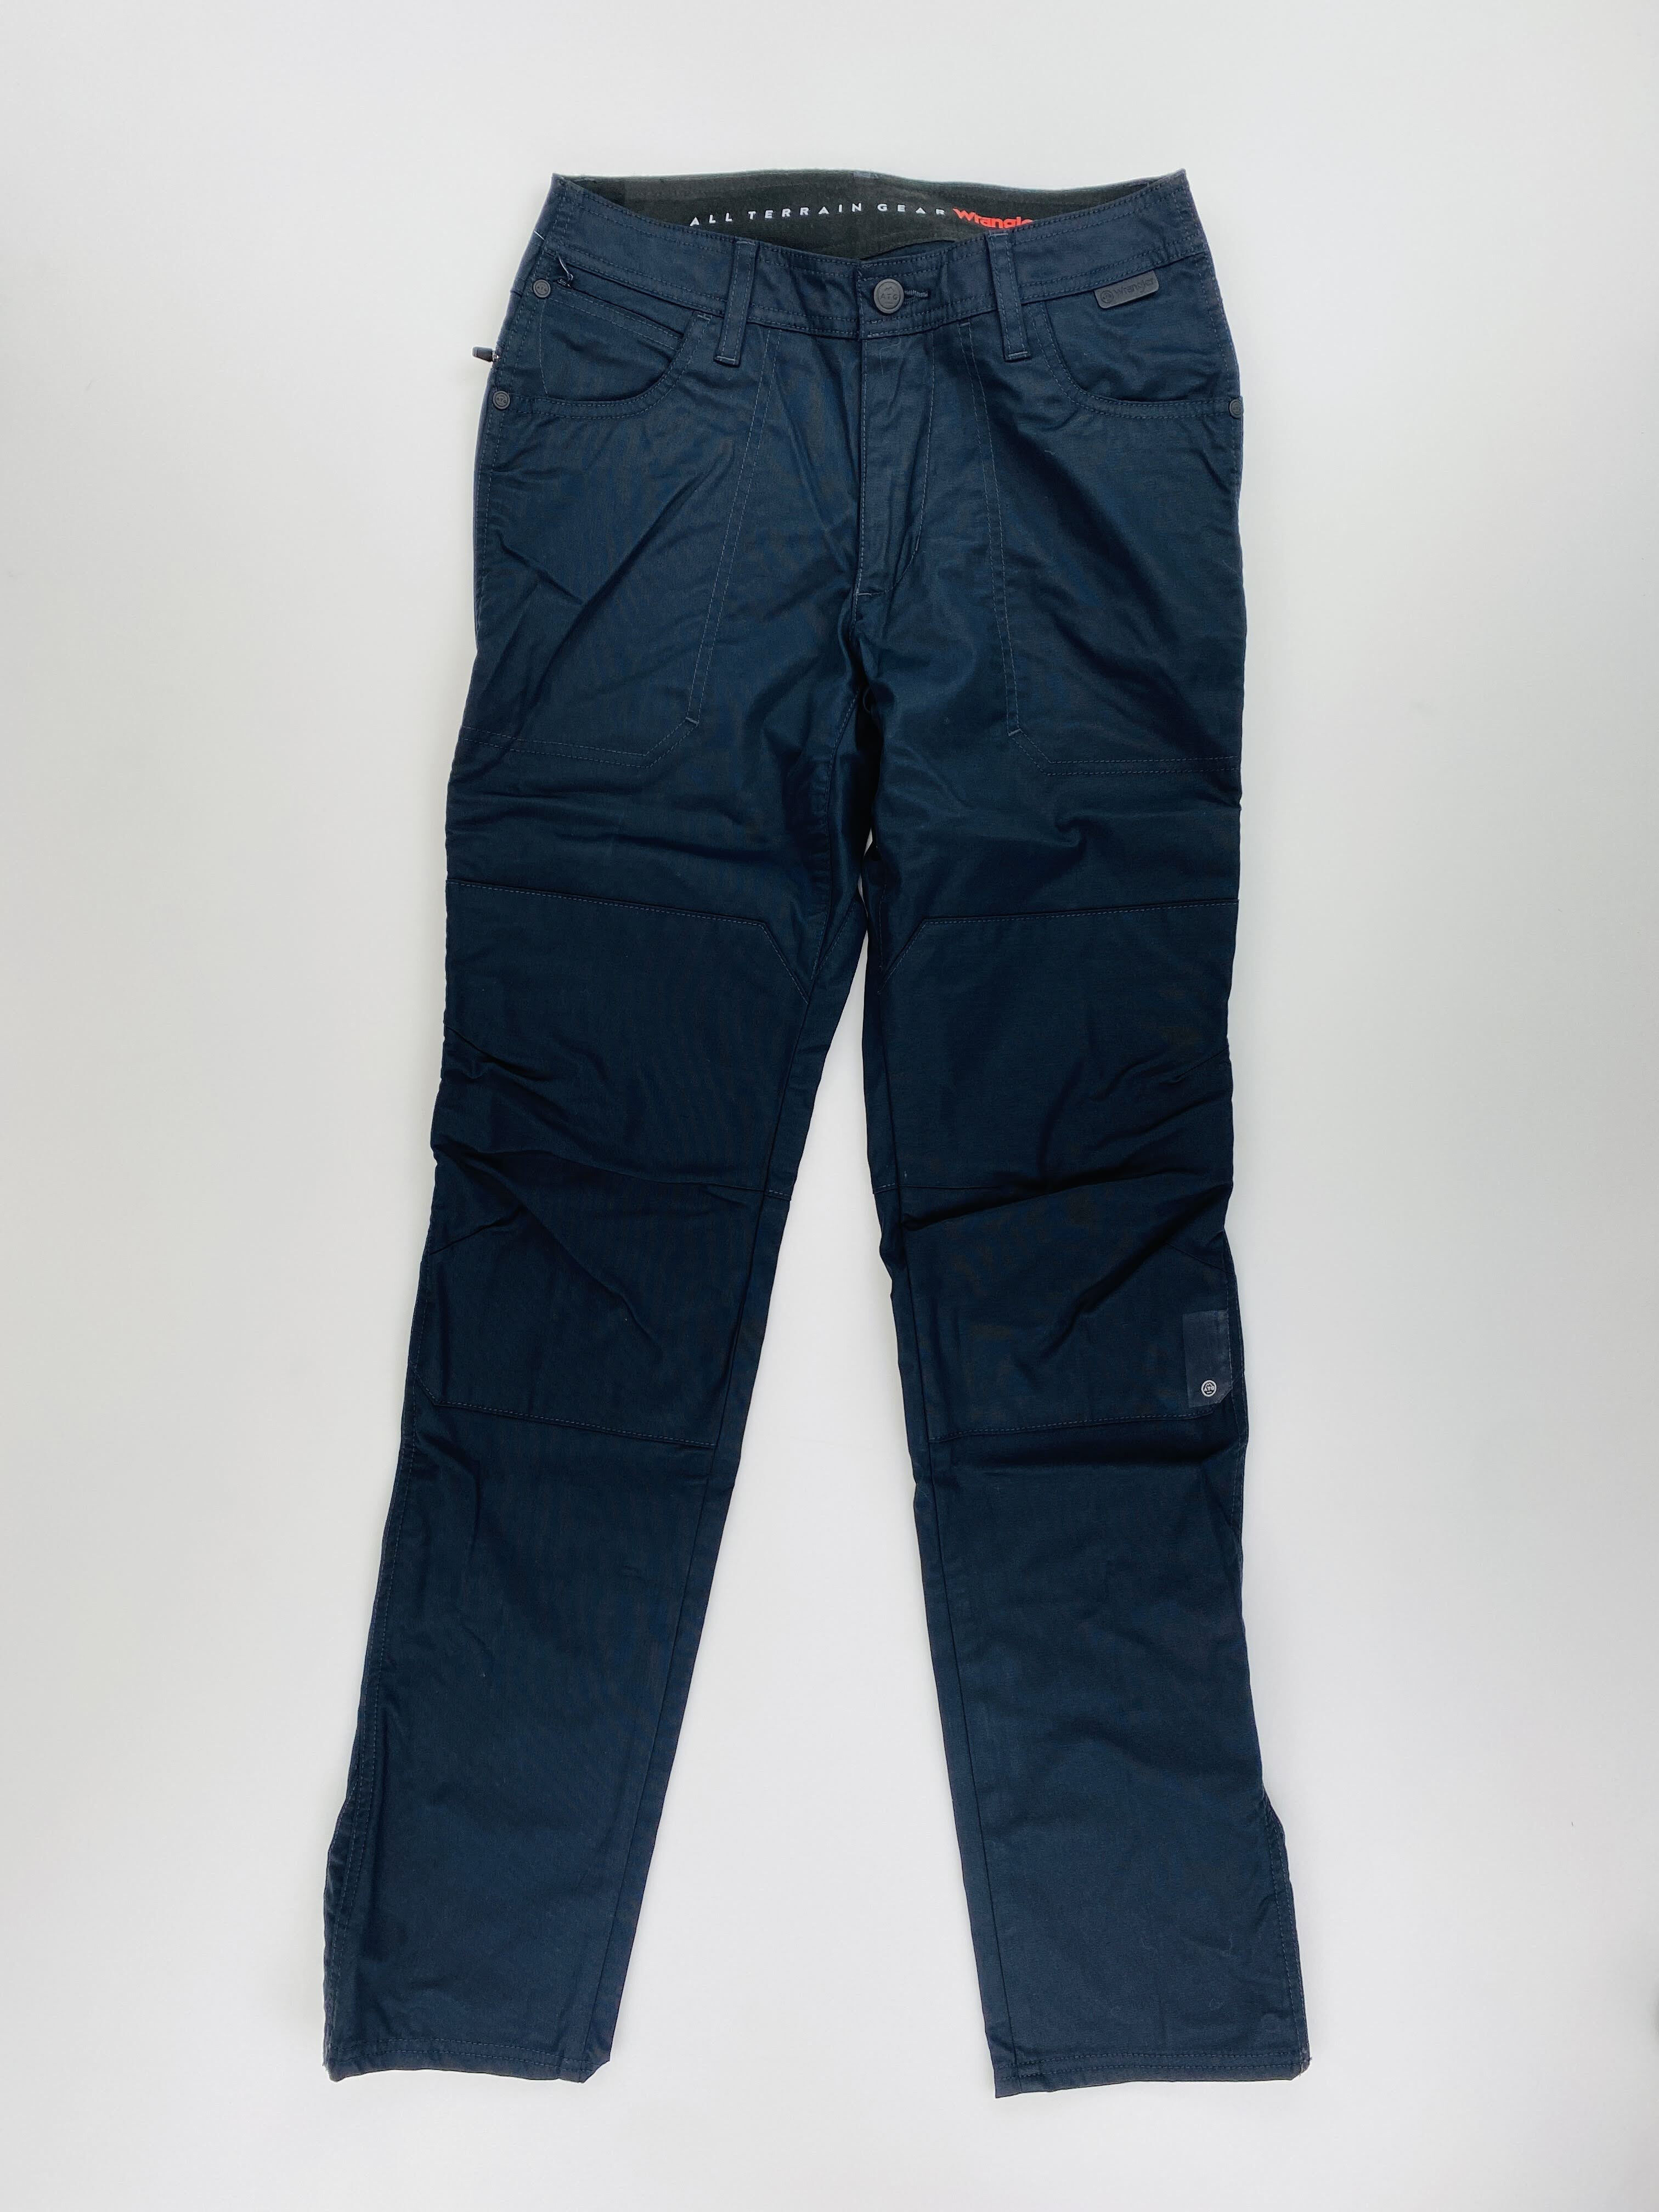 Wrangler Reinforced Softshell Pant - Second Hand Walking trousers - Women's - Black - US 28 | Hardloop